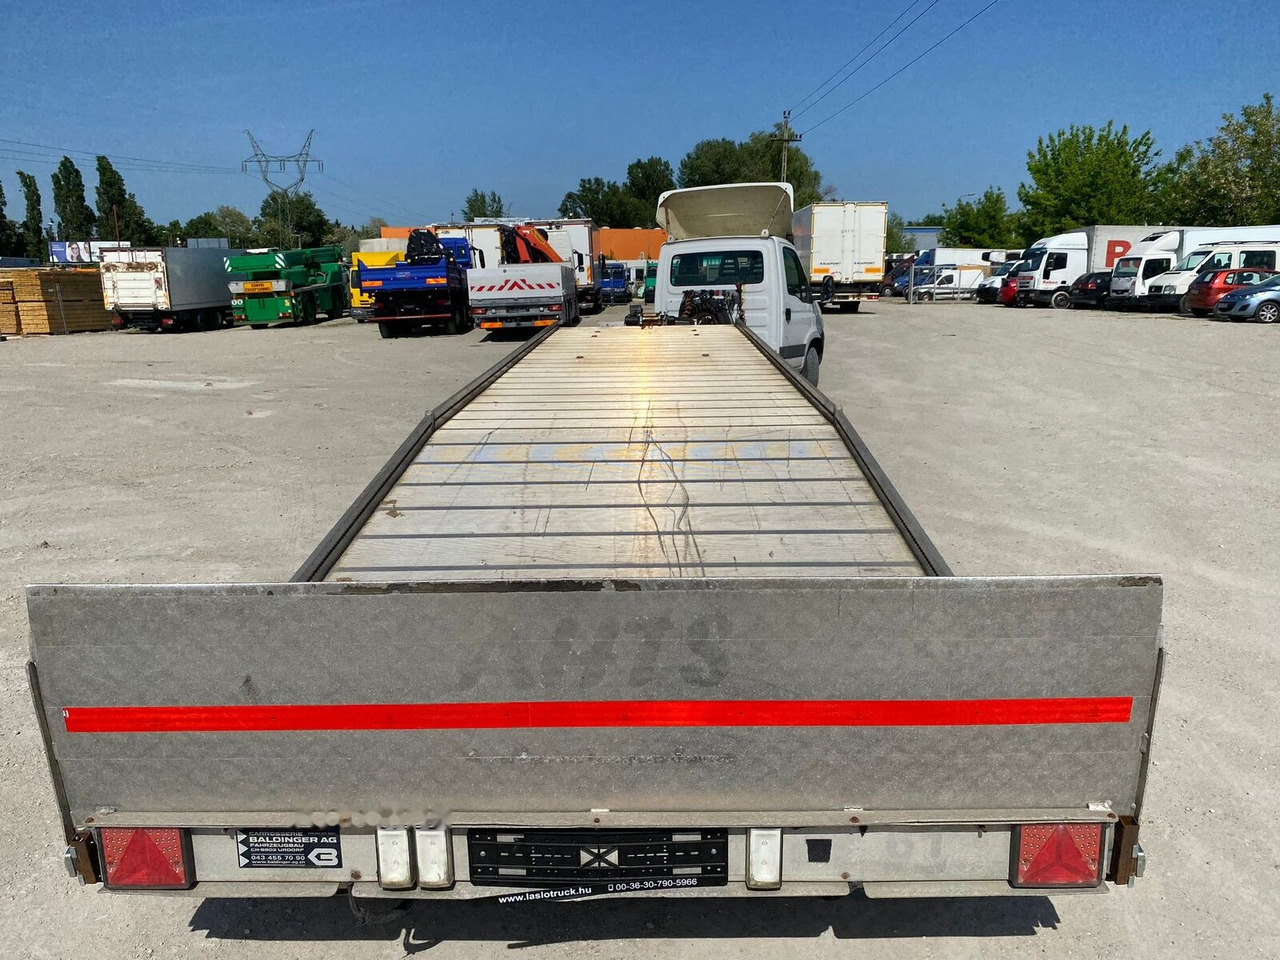 Автотранспортна полуприколка Baldinger - car transport trailer - 10m: слика 3